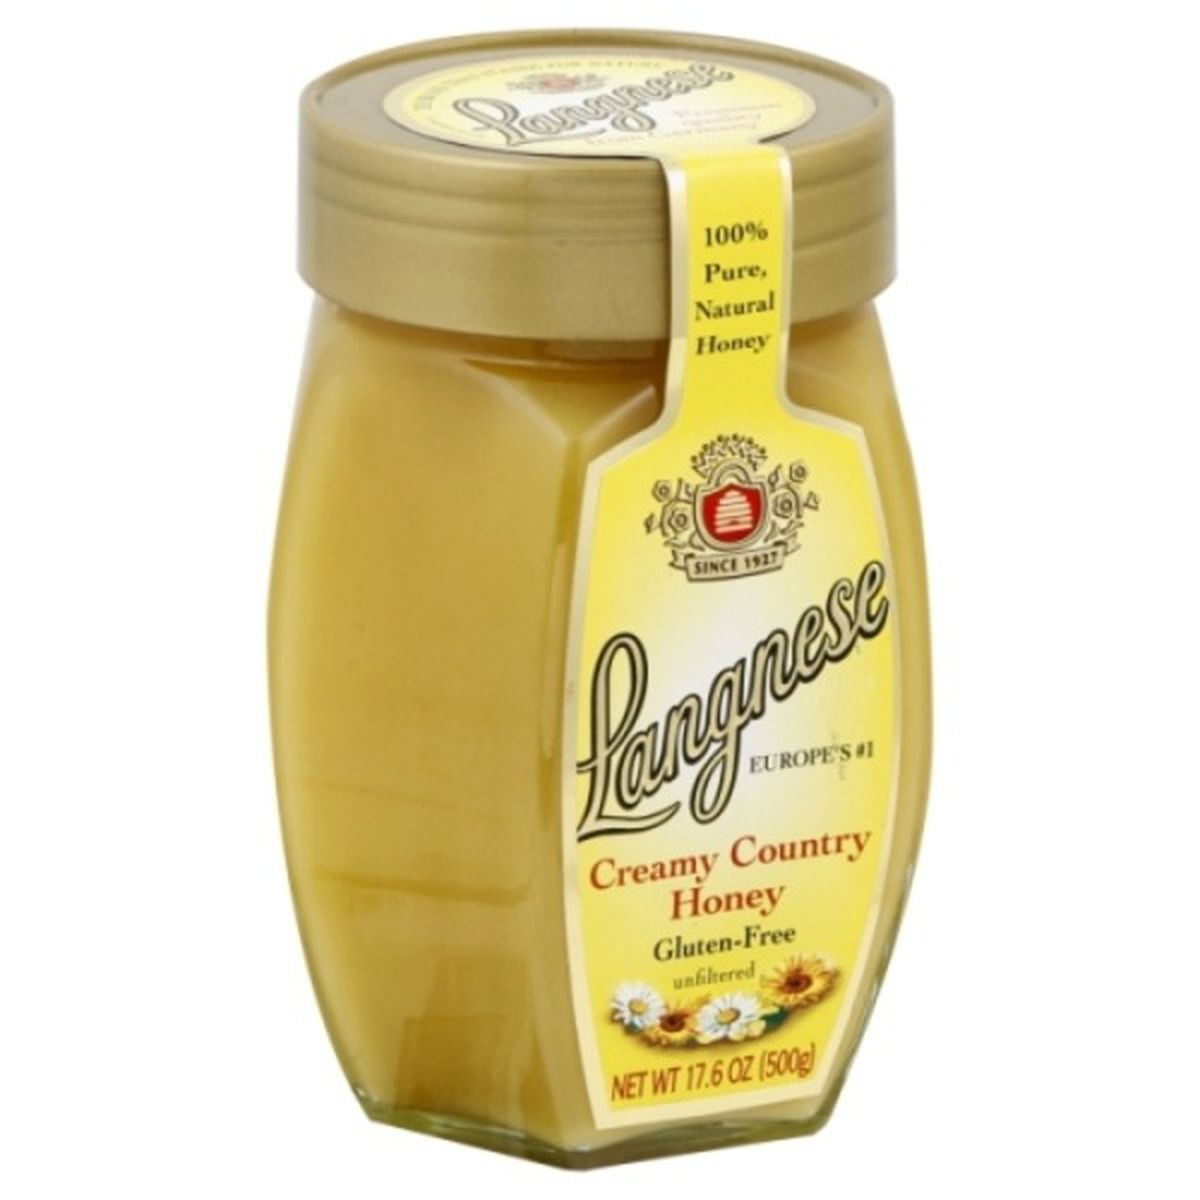 Calories in Langnese Honey, Creamy Country